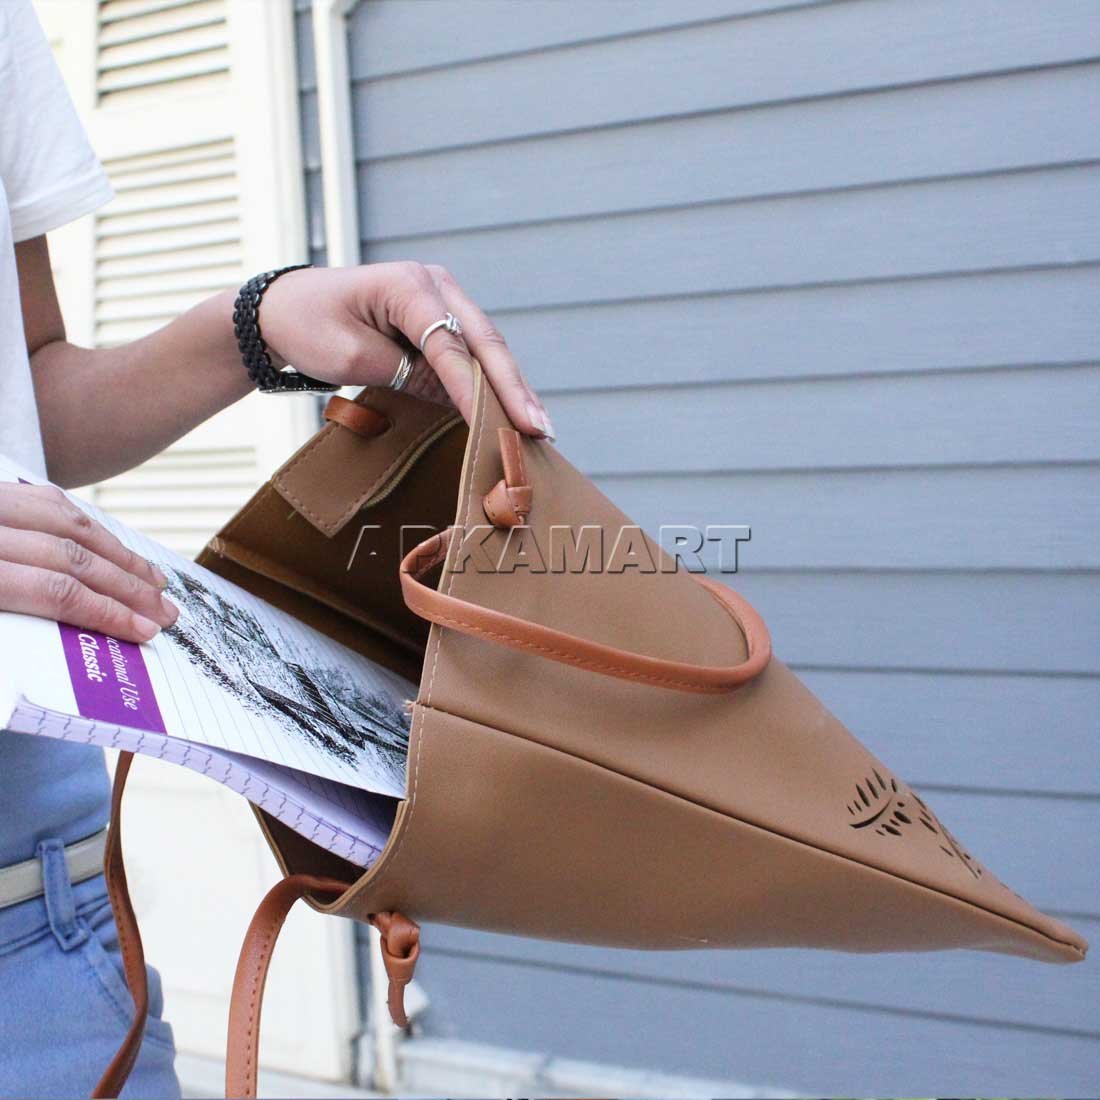 Handbags for Women |  Shoulder Bags for Women - 13 Inch - ApkaMart